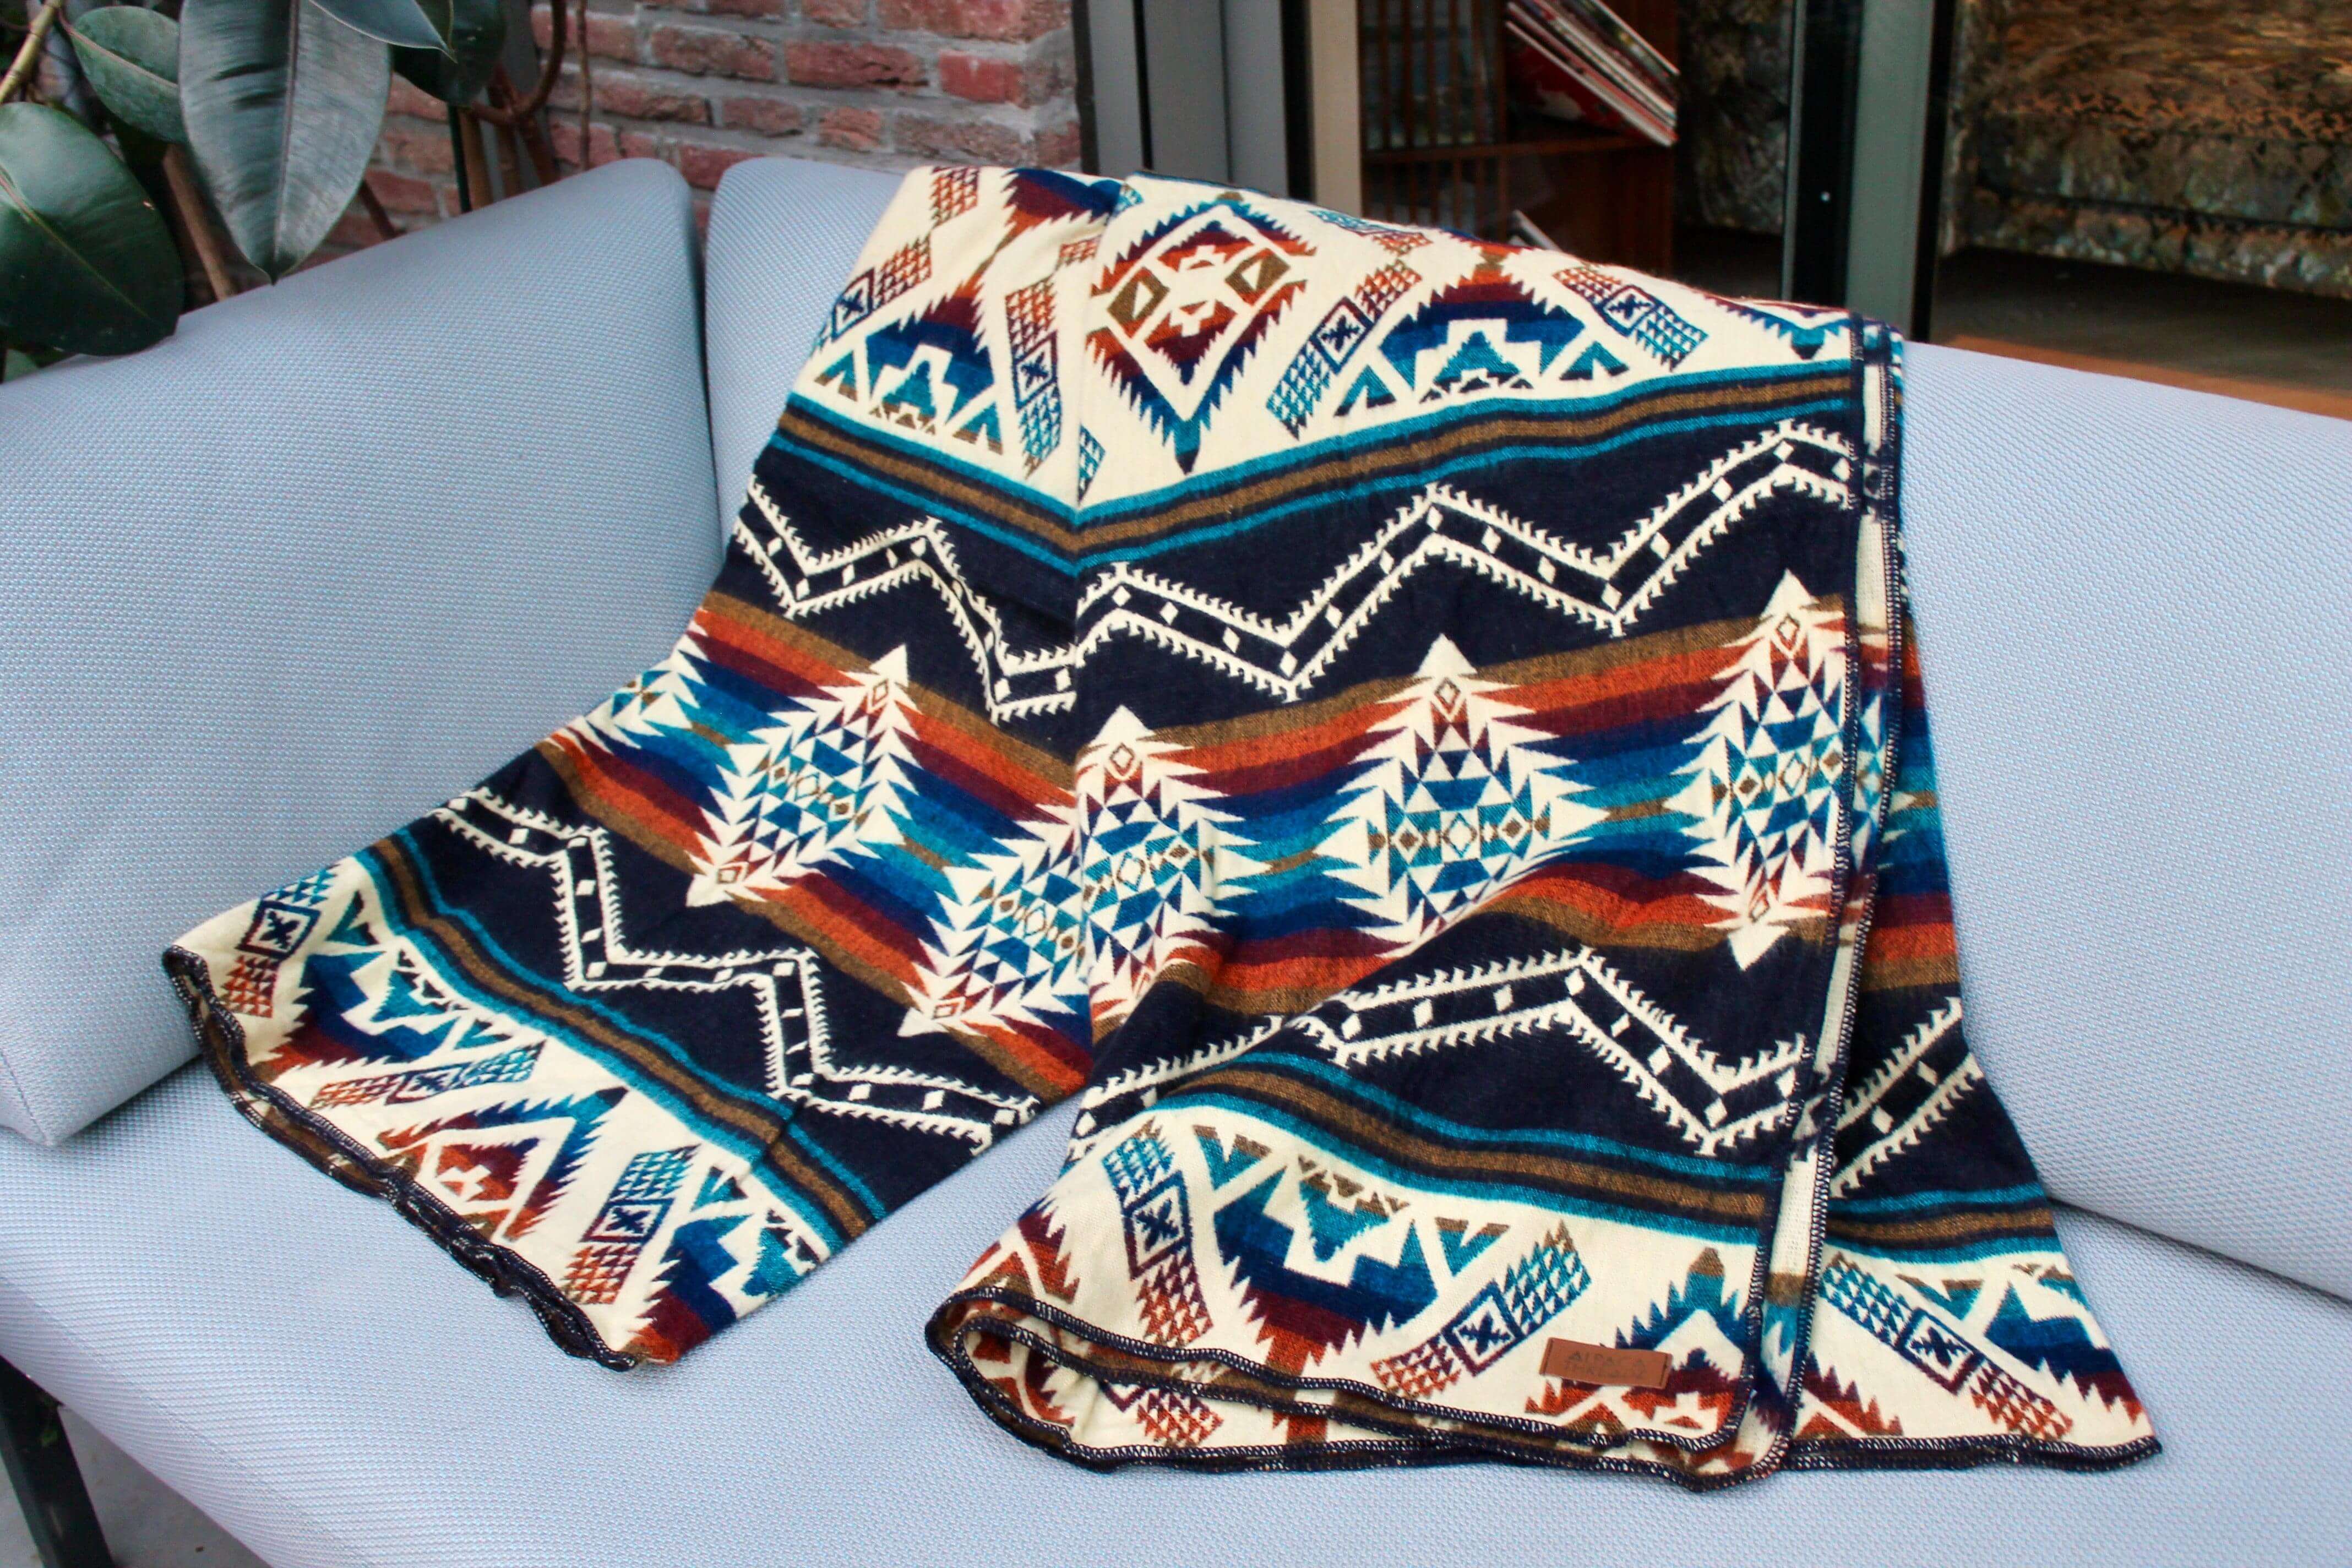 Handmade boho alpaca blanket from Peru